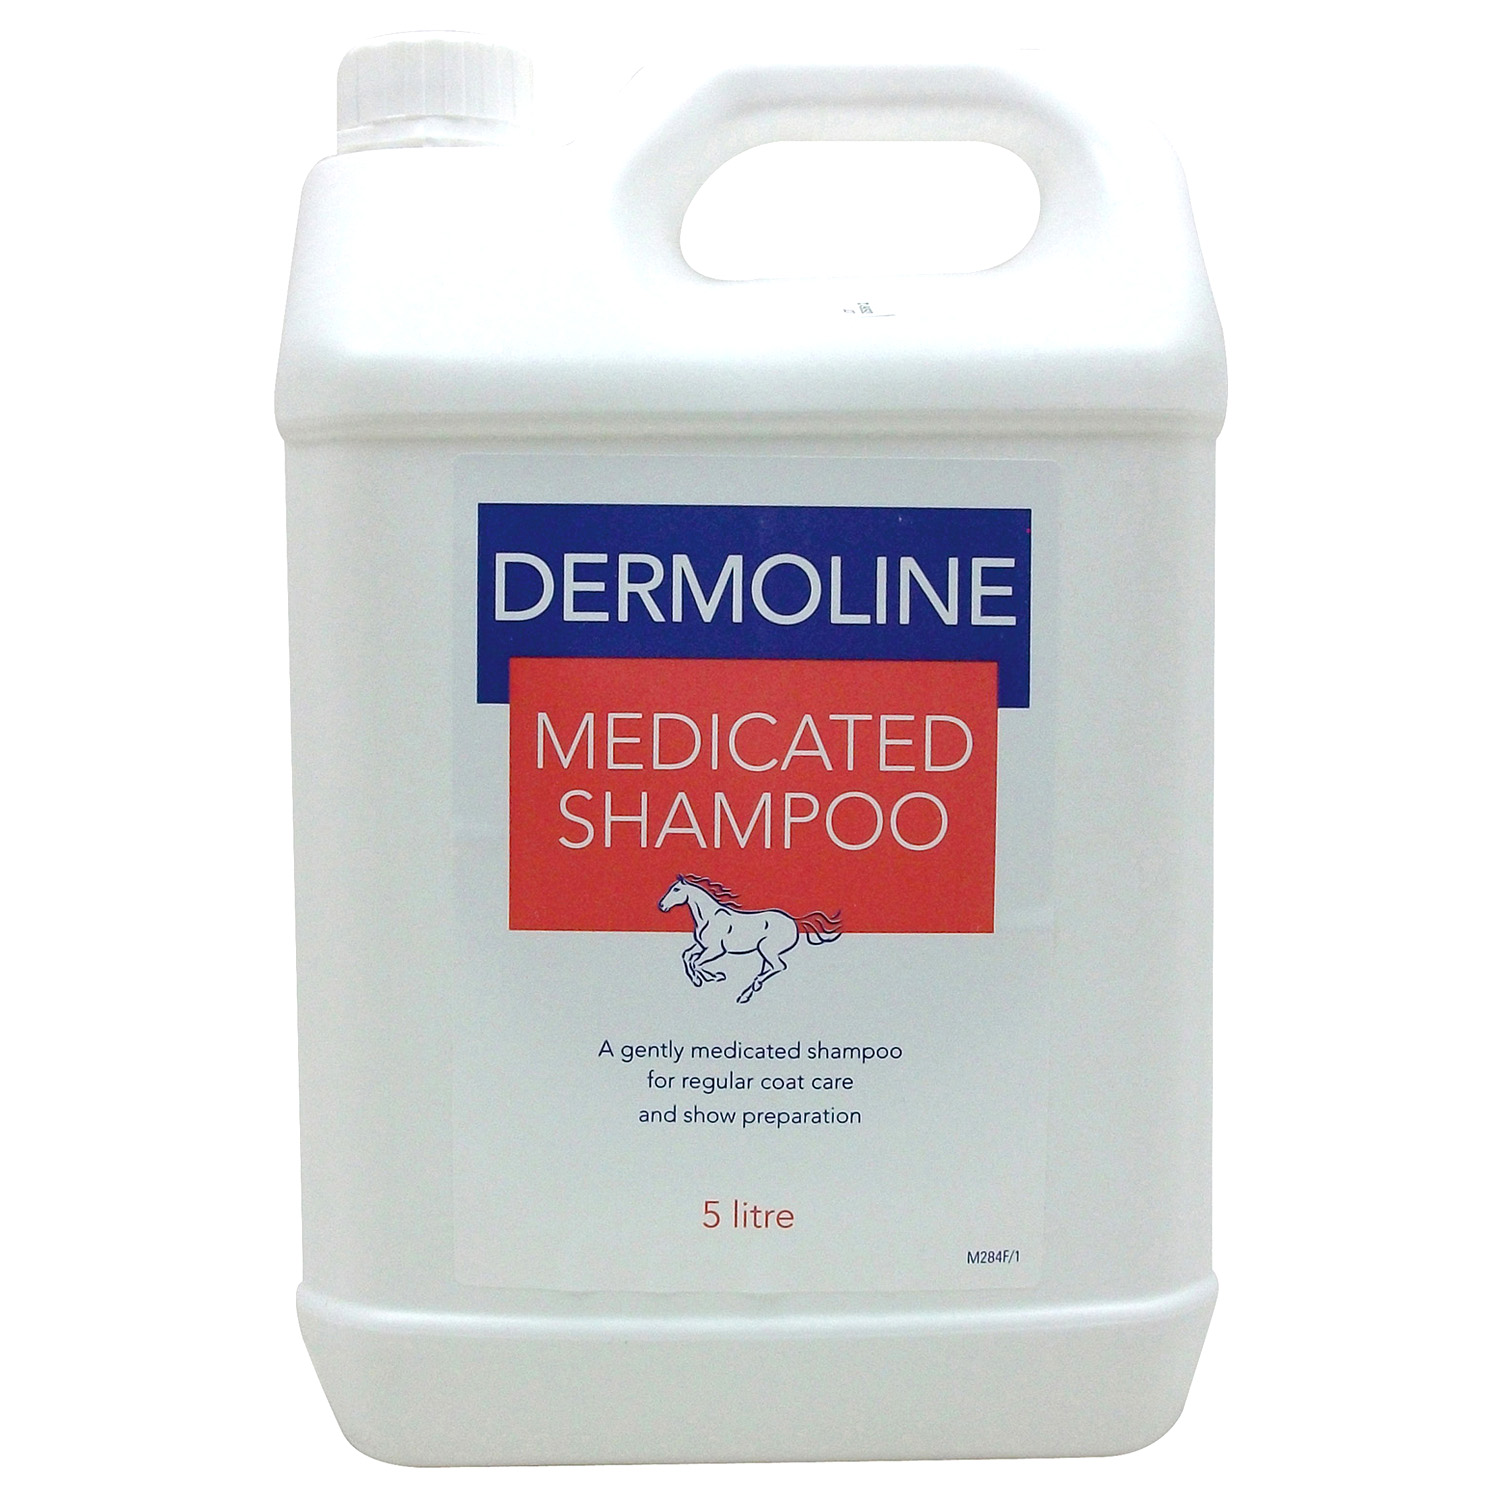 DERMOLINE MEDICATED SHAMPOO DERMOLINE MEDICATED SHAMPOO 5 LT  5 LT